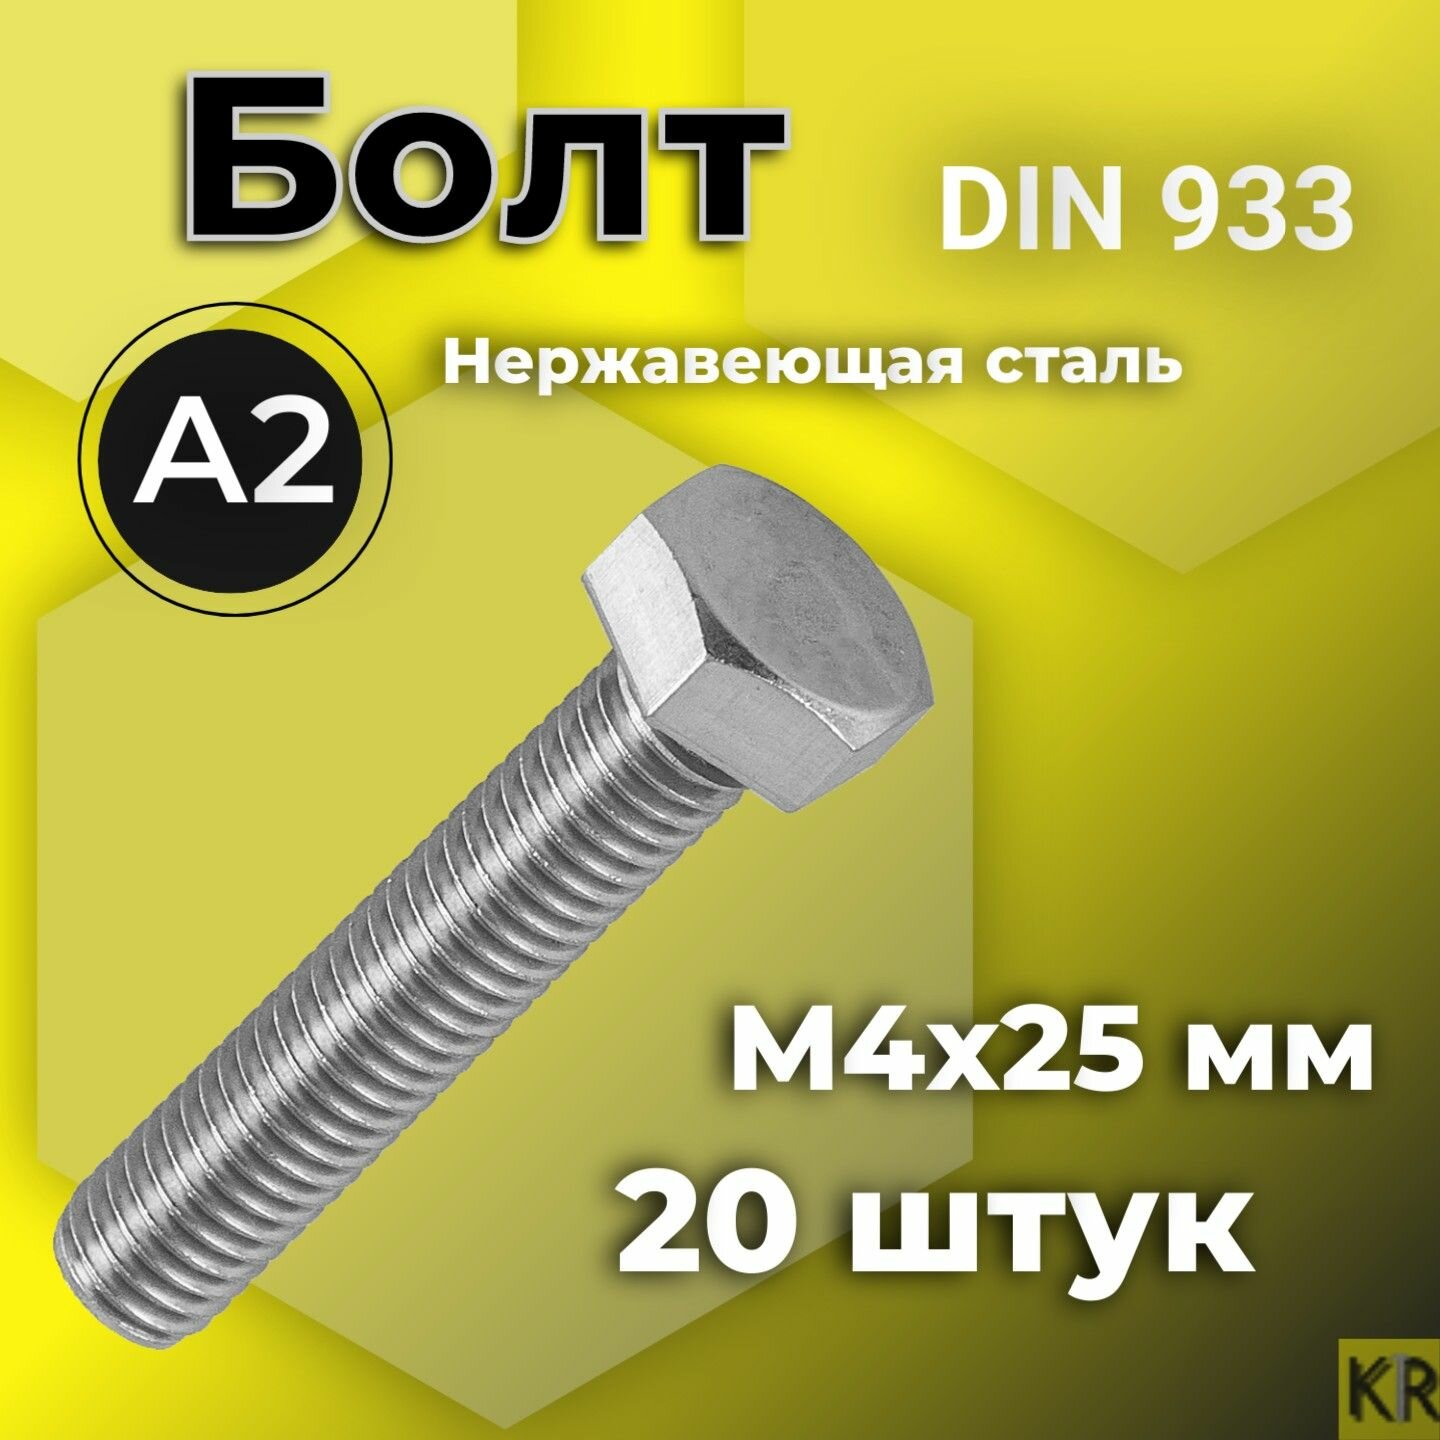 Болт М4х25 20 шт. Нержавеющая сталь А2. DIN 933. Шестигранная головка